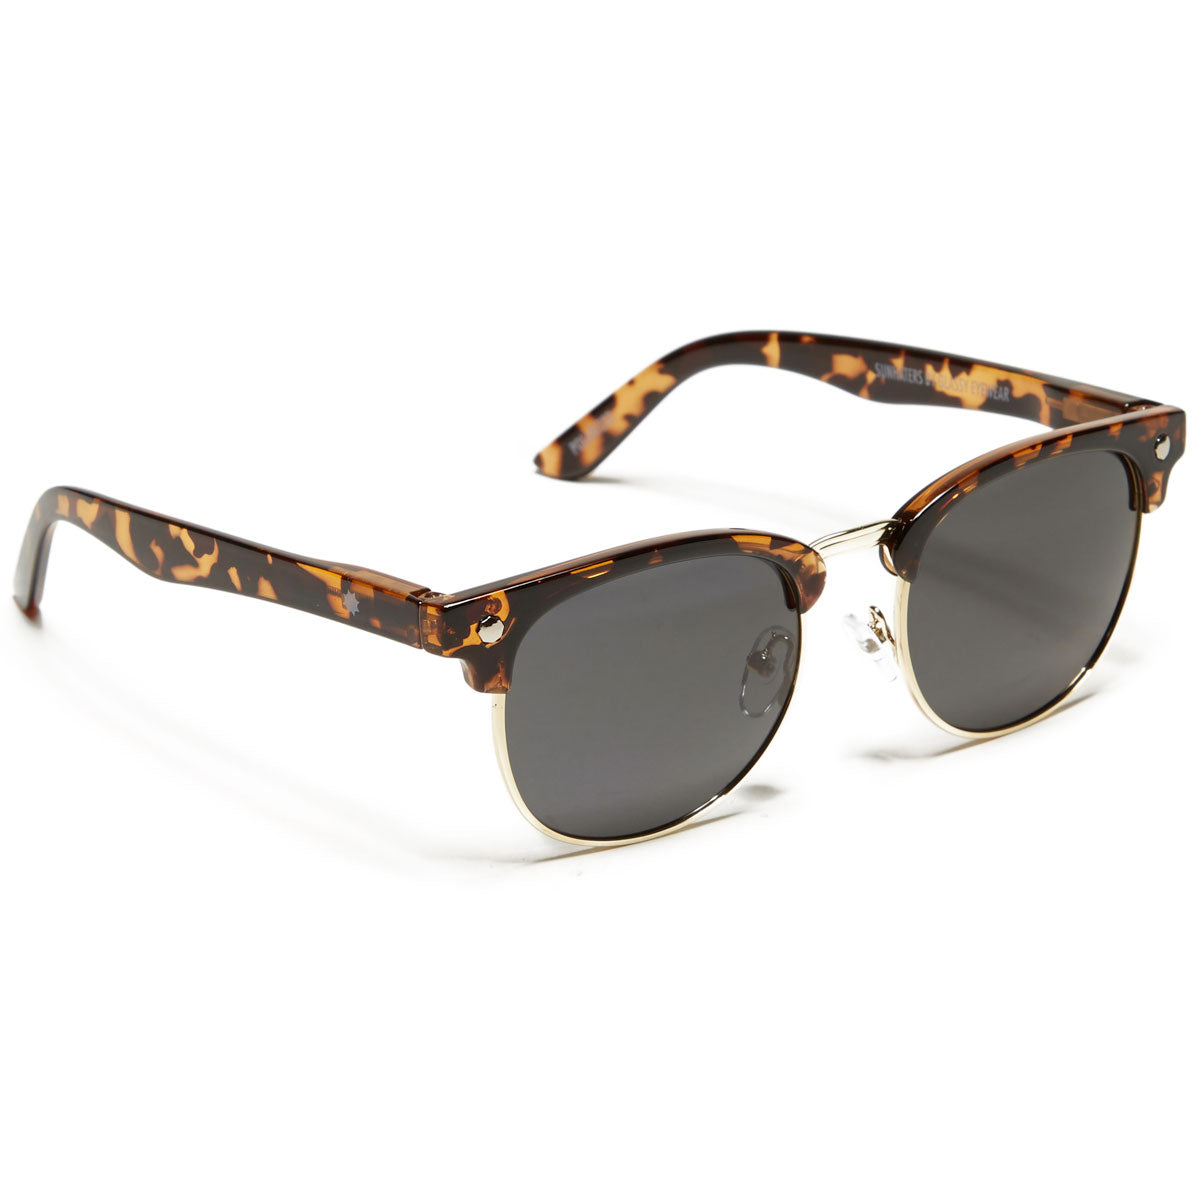 Glassy Morrison Polarized Sunglasses - Tortoise image 1